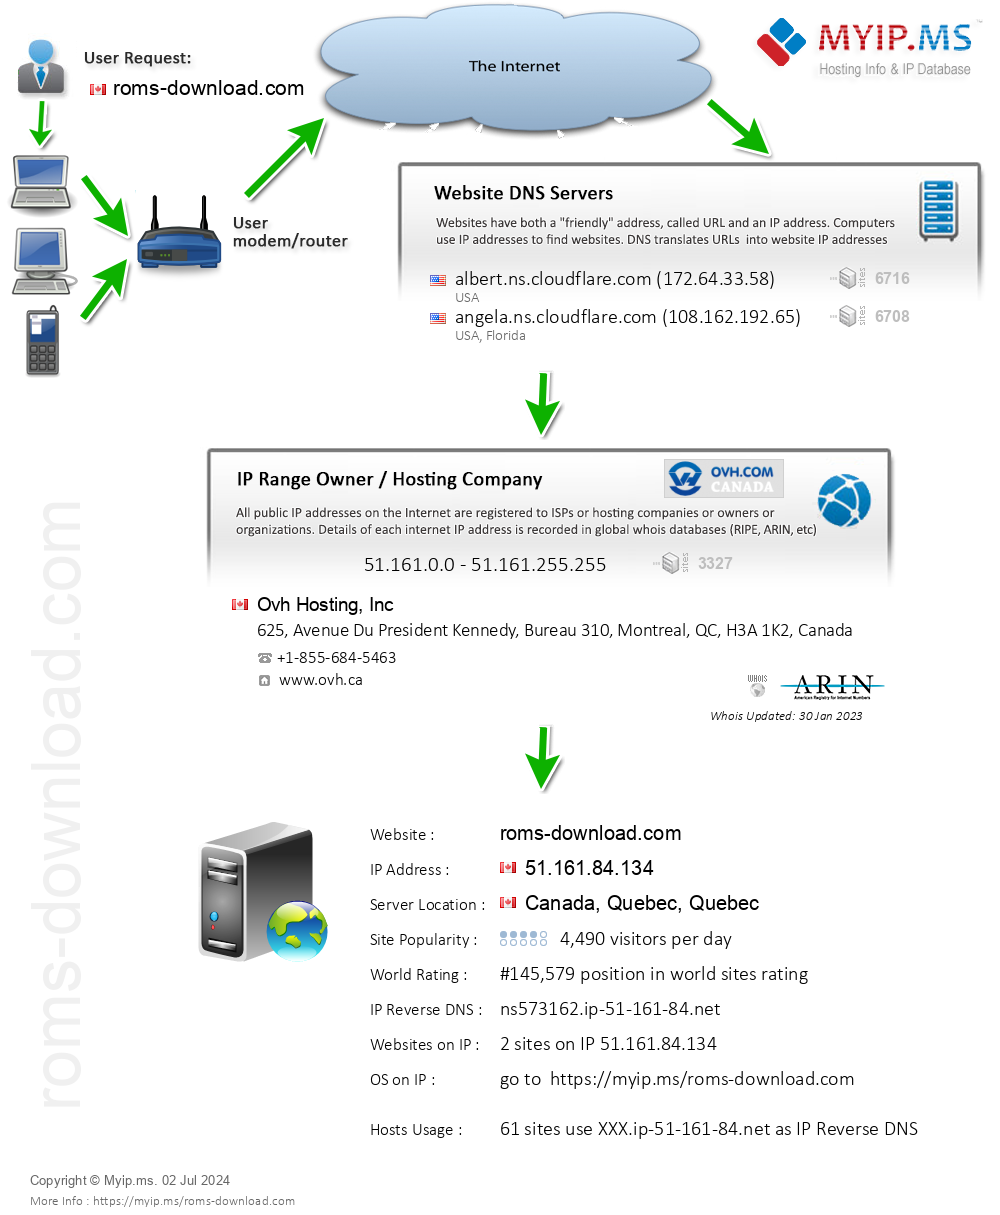 Roms-download.com - Website Hosting Visual IP Diagram